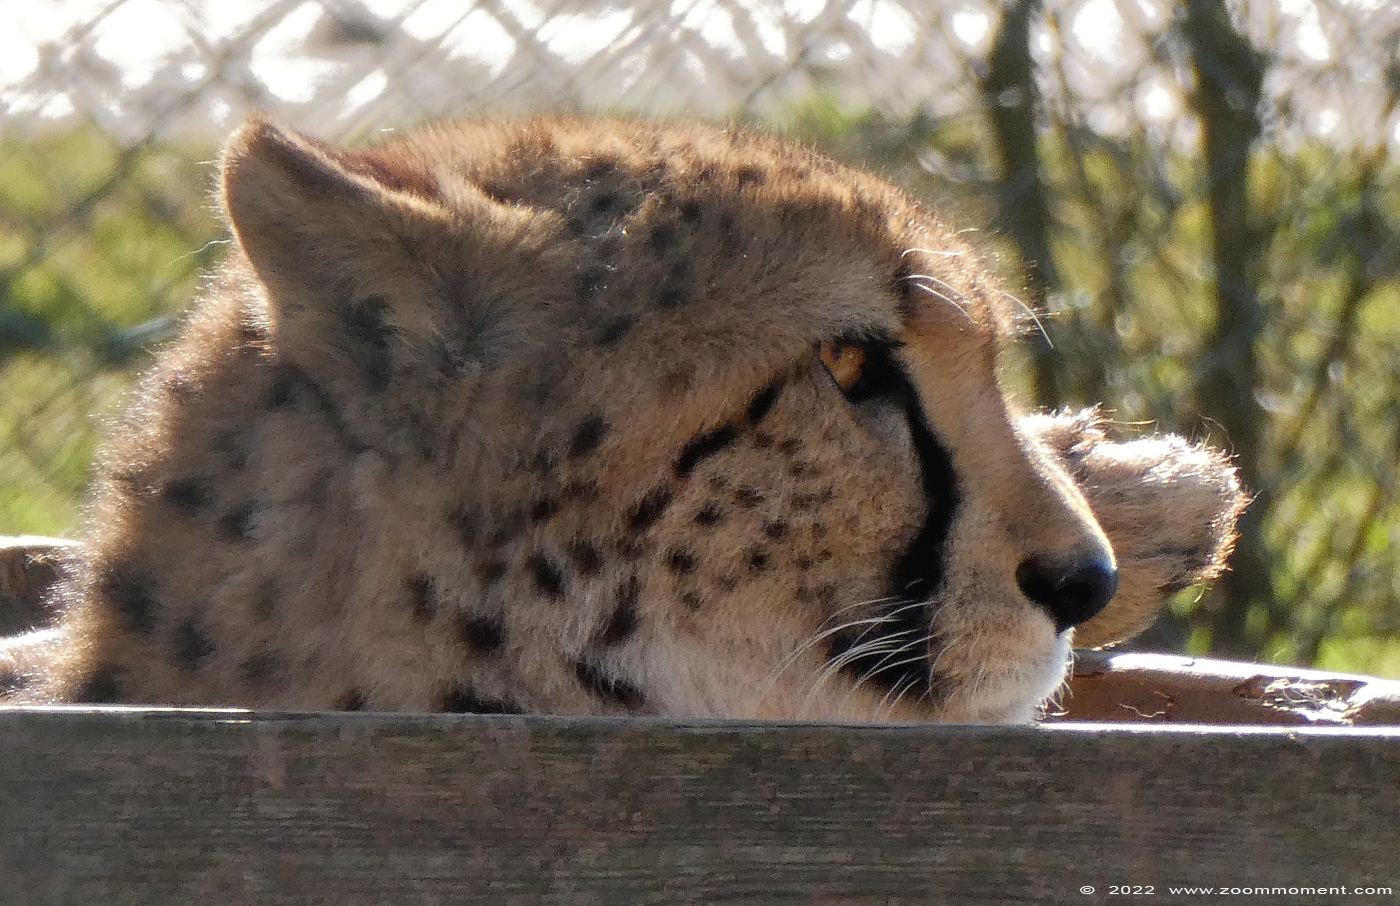 cheetah of jachtluipaard ( Acinonyx jubatus jubatus ) cheeta Gepard
Trefwoorden: Monde Sauvage Belgium cheetah jachtluipaard Acinonyx jubatus jubatus cheeta Gepard